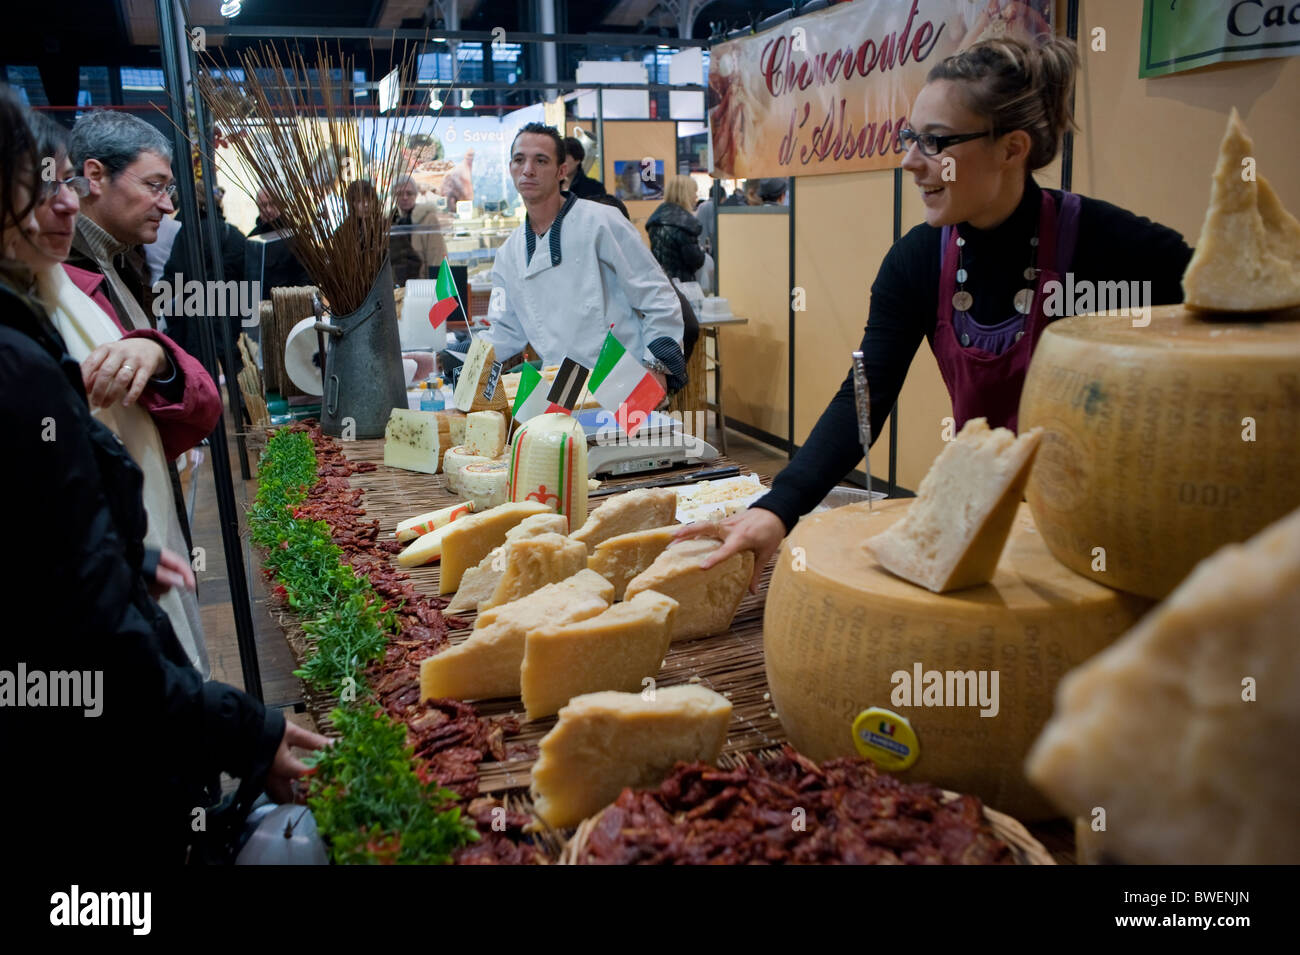 Paris, France, Small Group People, Women Clerks, Cuisine Food Festival, Italian Cheese Specialties, 'Papilles en Fête', fromagerie Paris Stock Photo